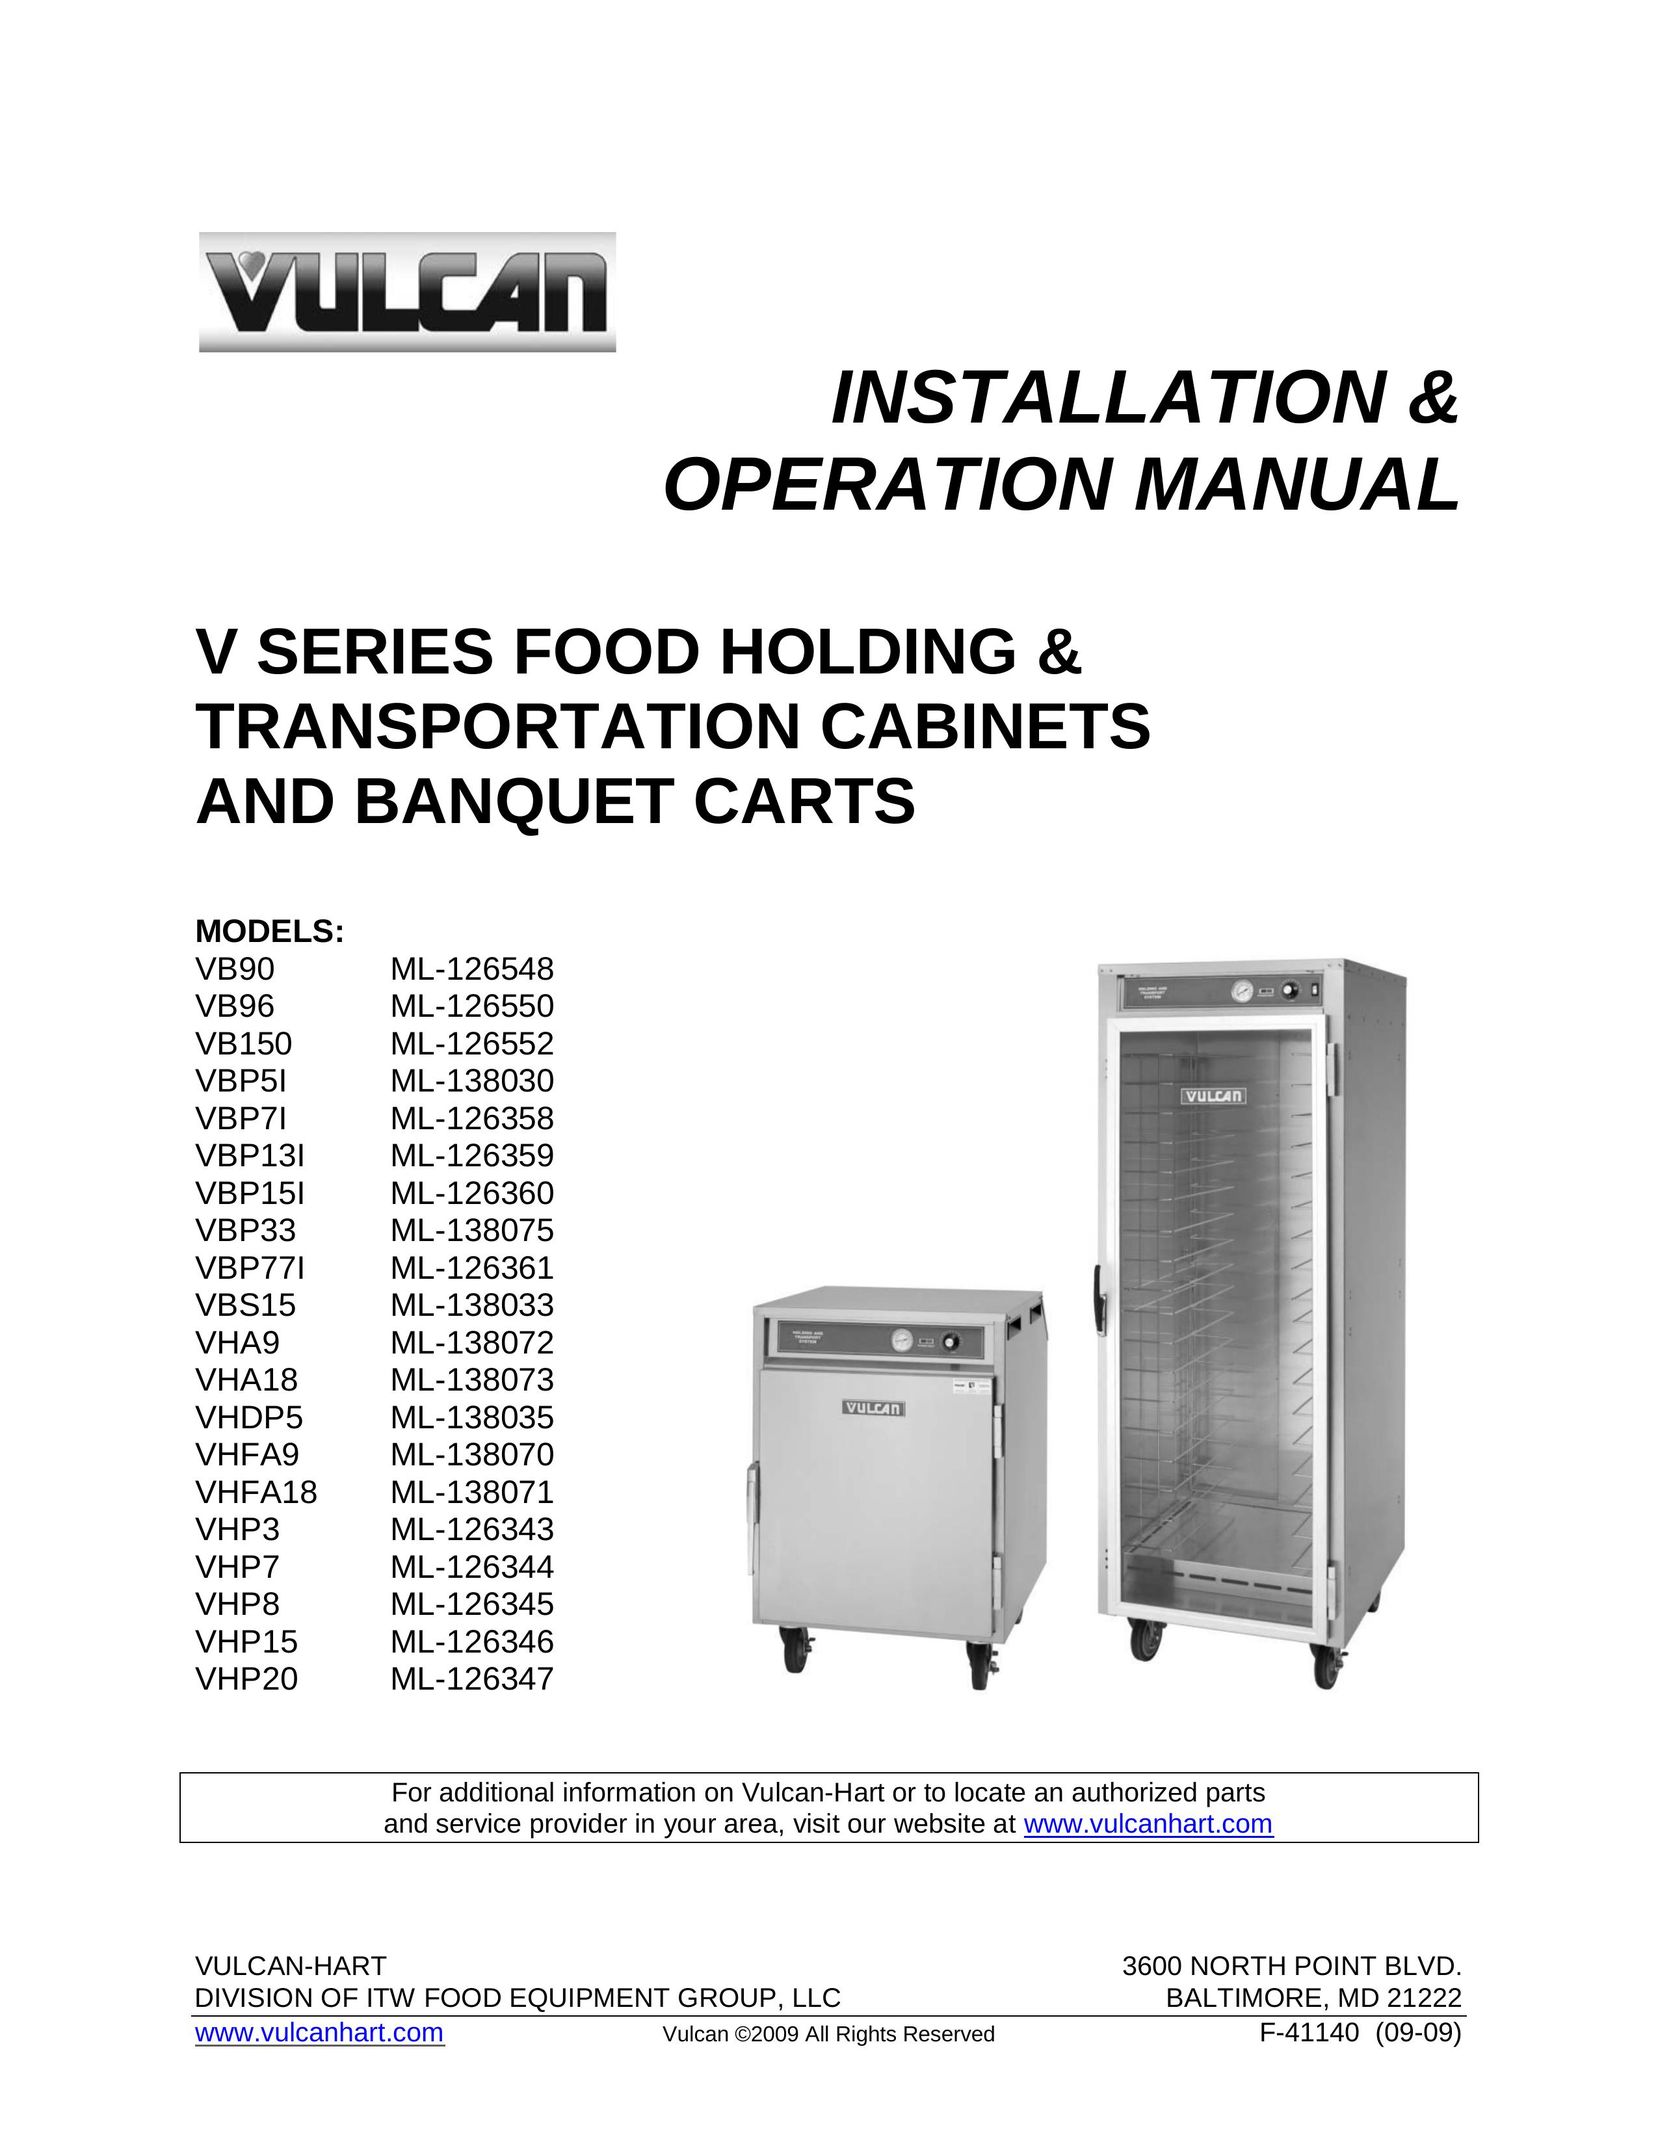 Vulcan-Hart VHFA18 ML-138071 Food Warmer User Manual